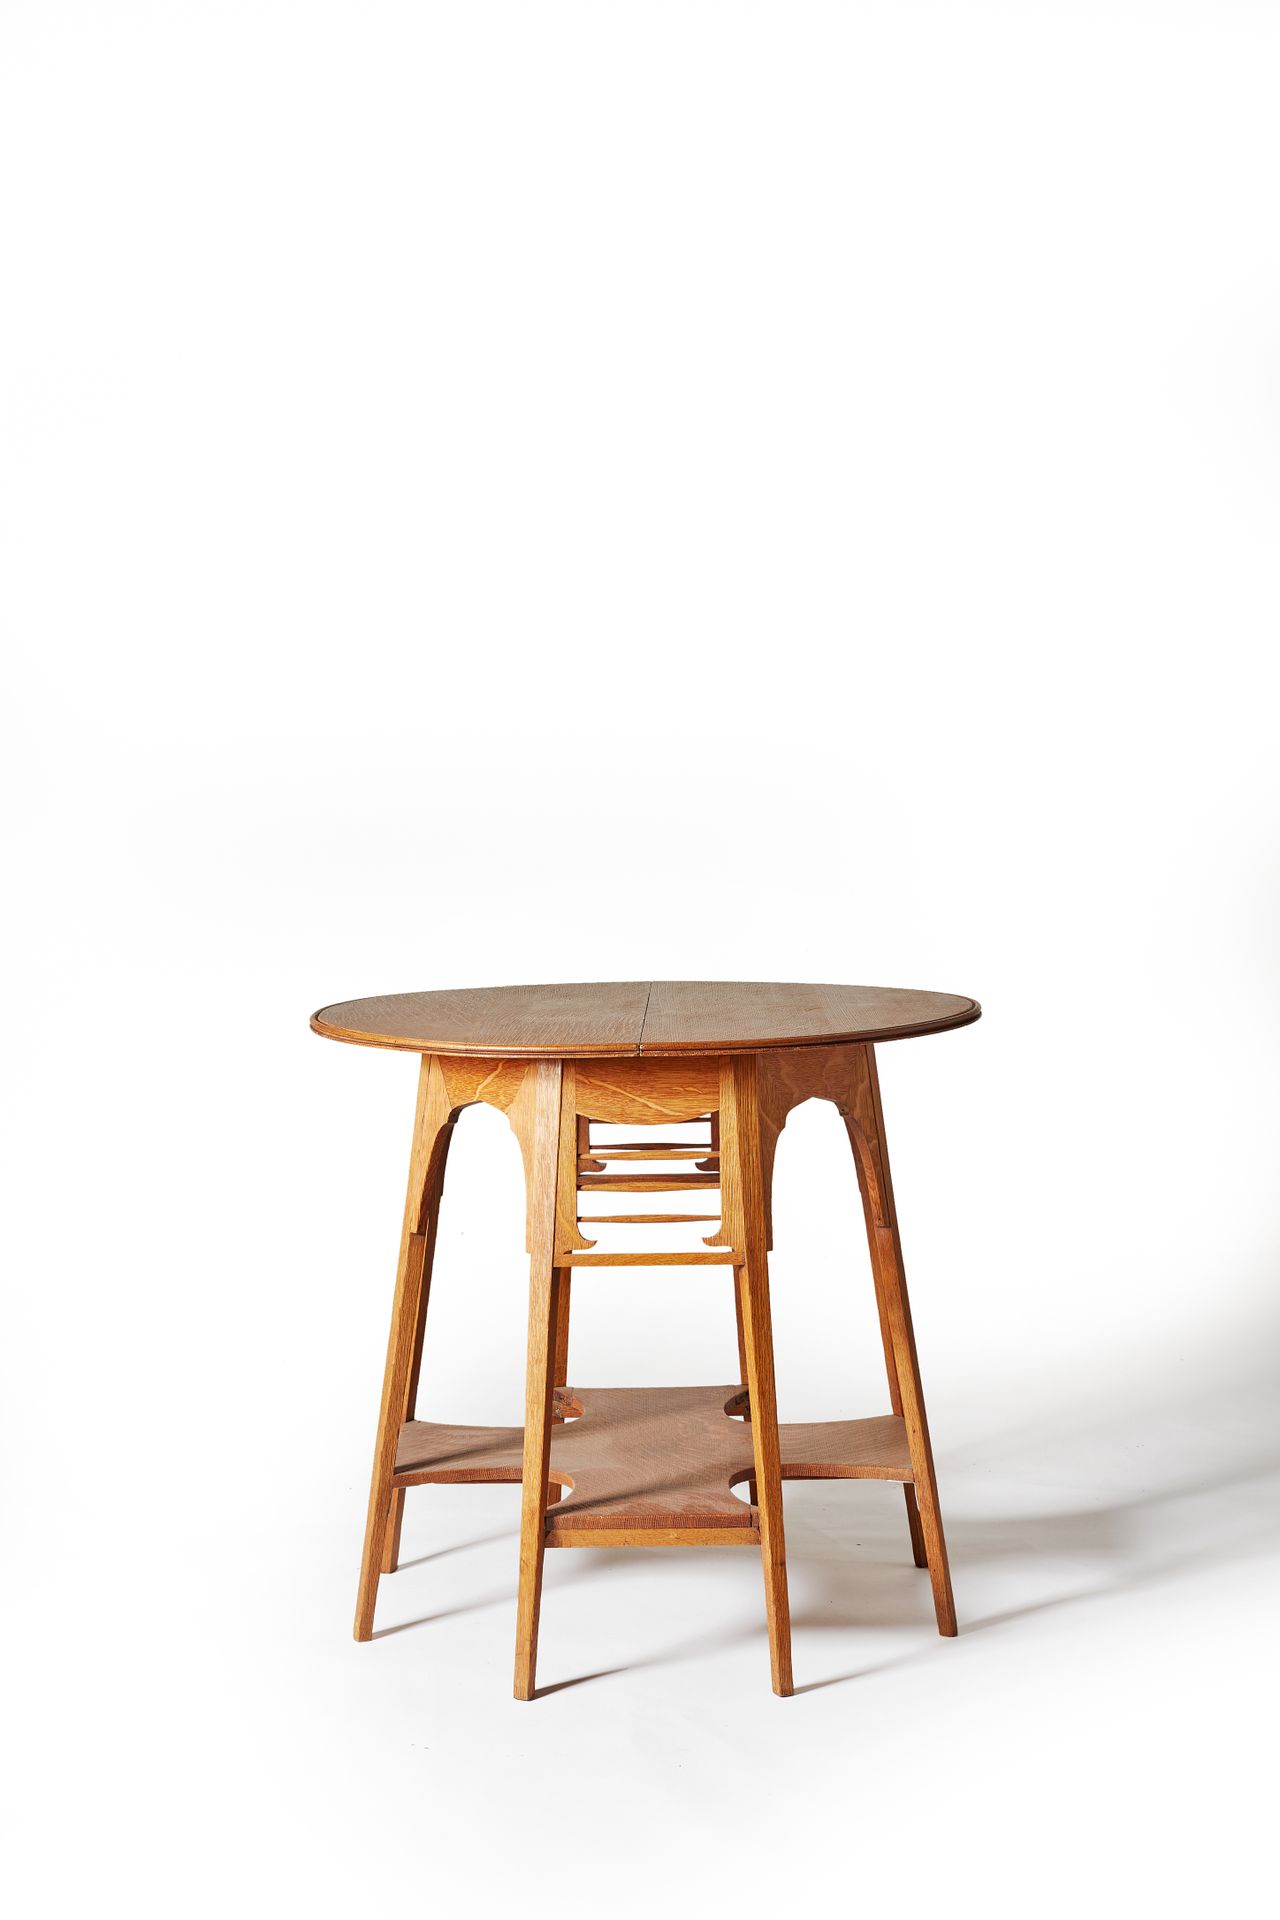 Null 橡木基座桌，八角形的底座由马耳他十字支架连接。

20世纪初。

高度73 - 直径81厘米

分裂的顶部。